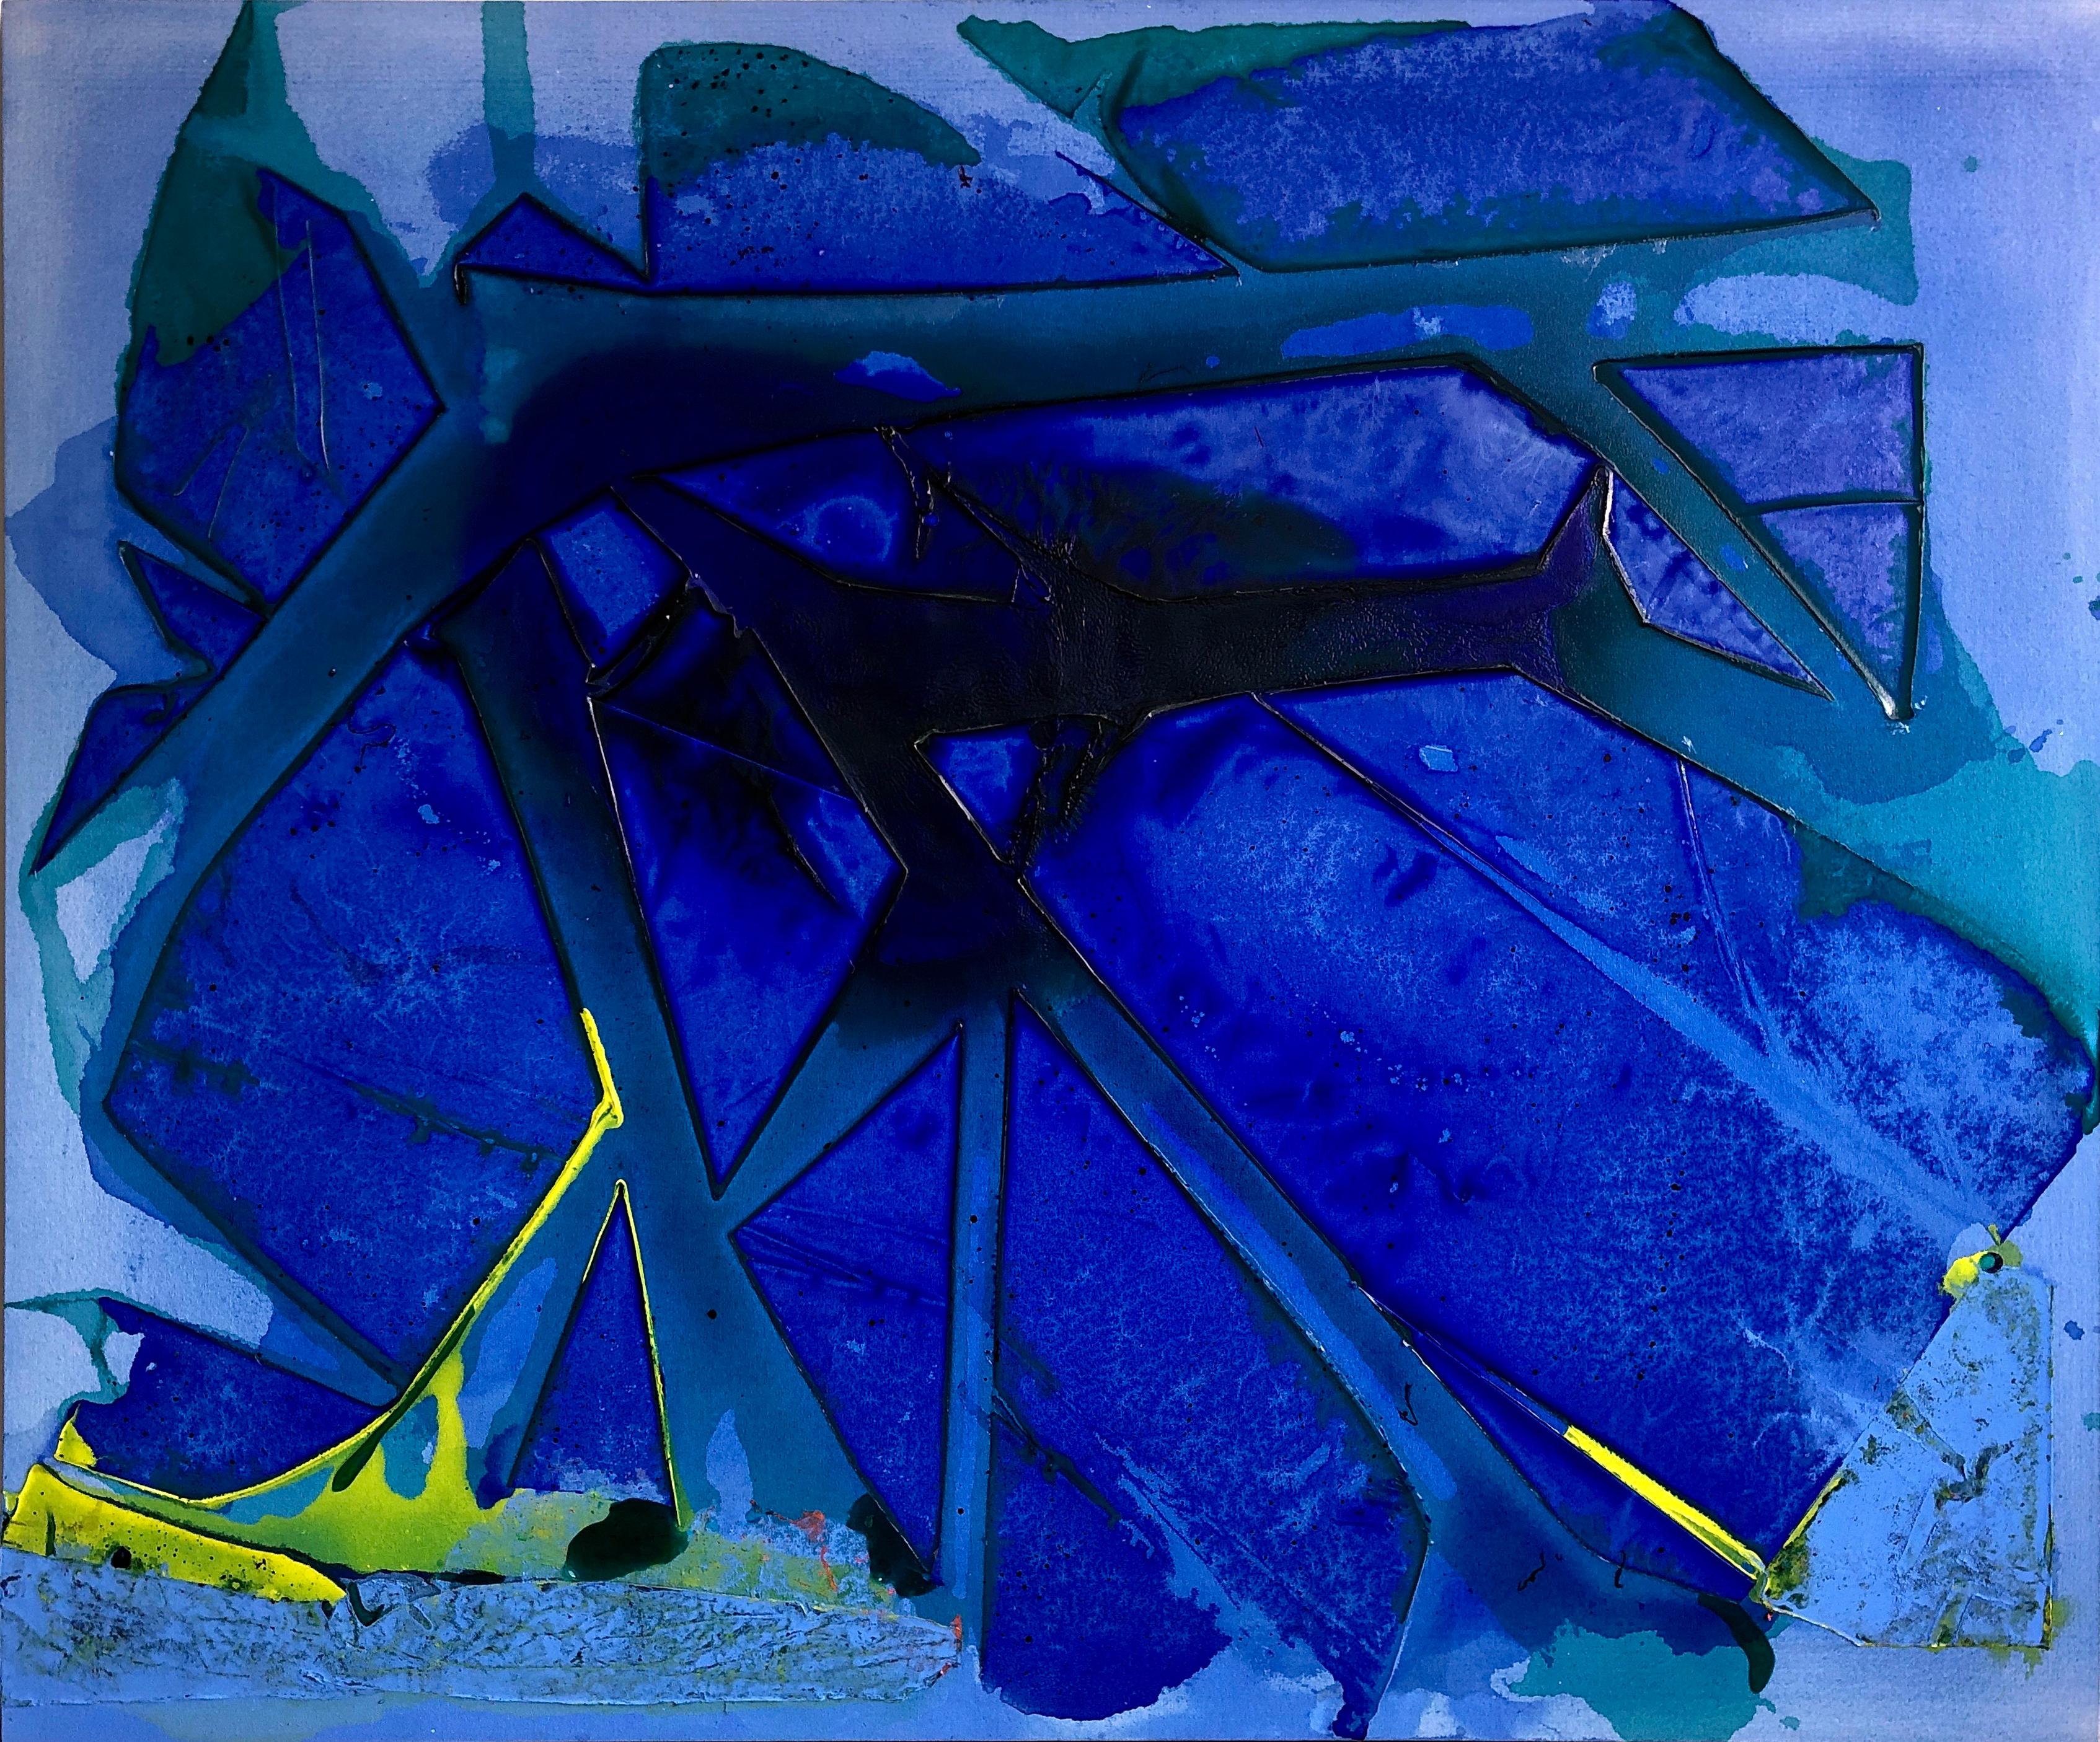 Jeffrey Kurland Landscape Painting - "ON THIN ICE", Abstract Painting, Ultramarine Blue, Frozen, Crystalline, Glass